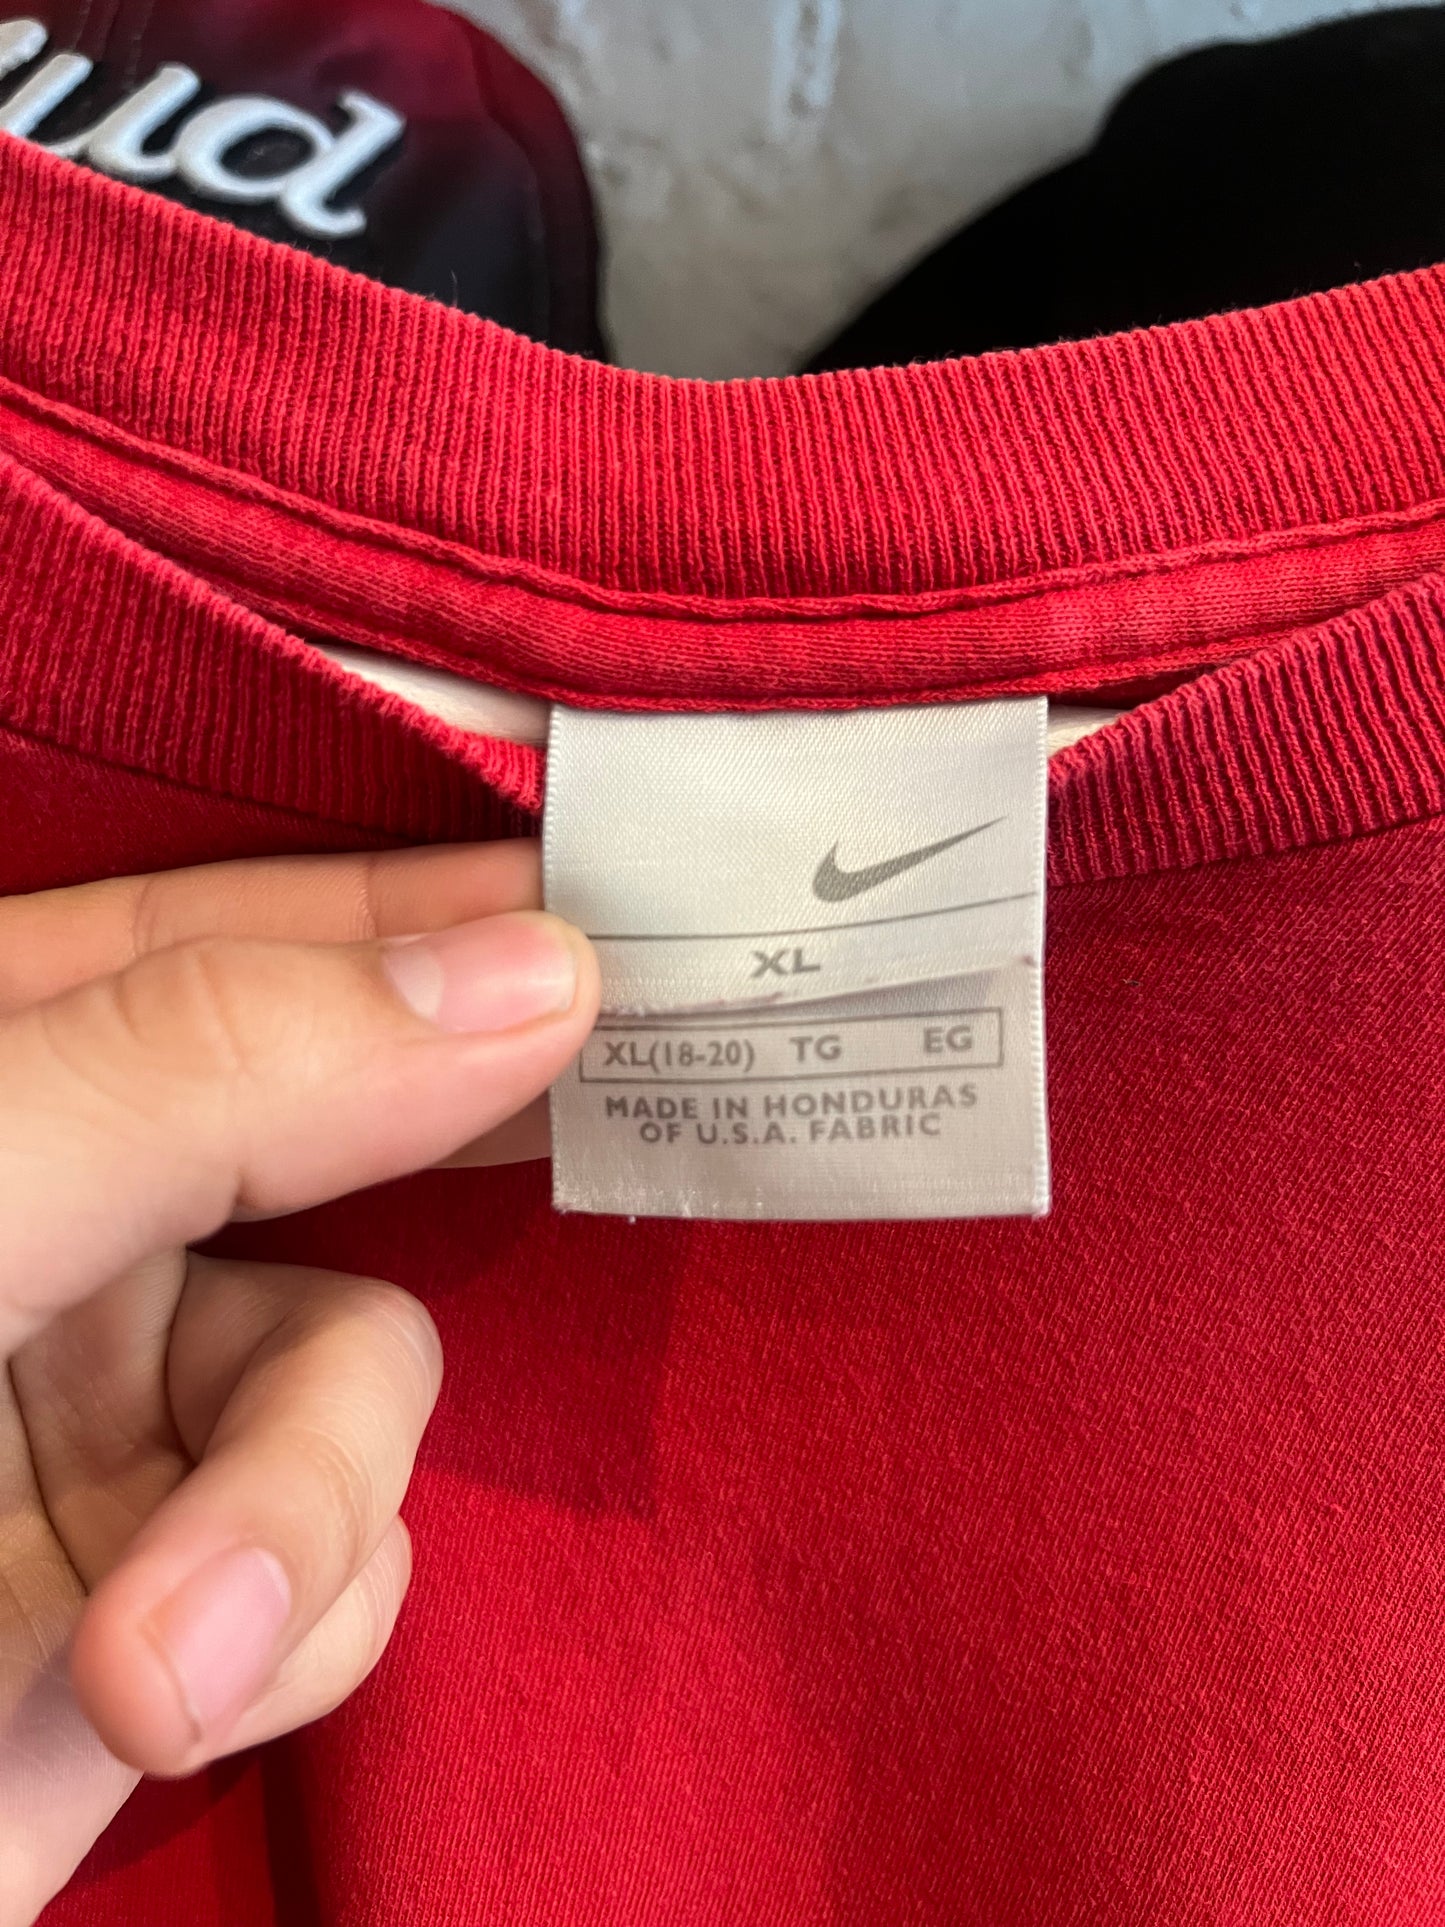 Nike Hoops L/S T-shirt size Kids XL/ Adult M